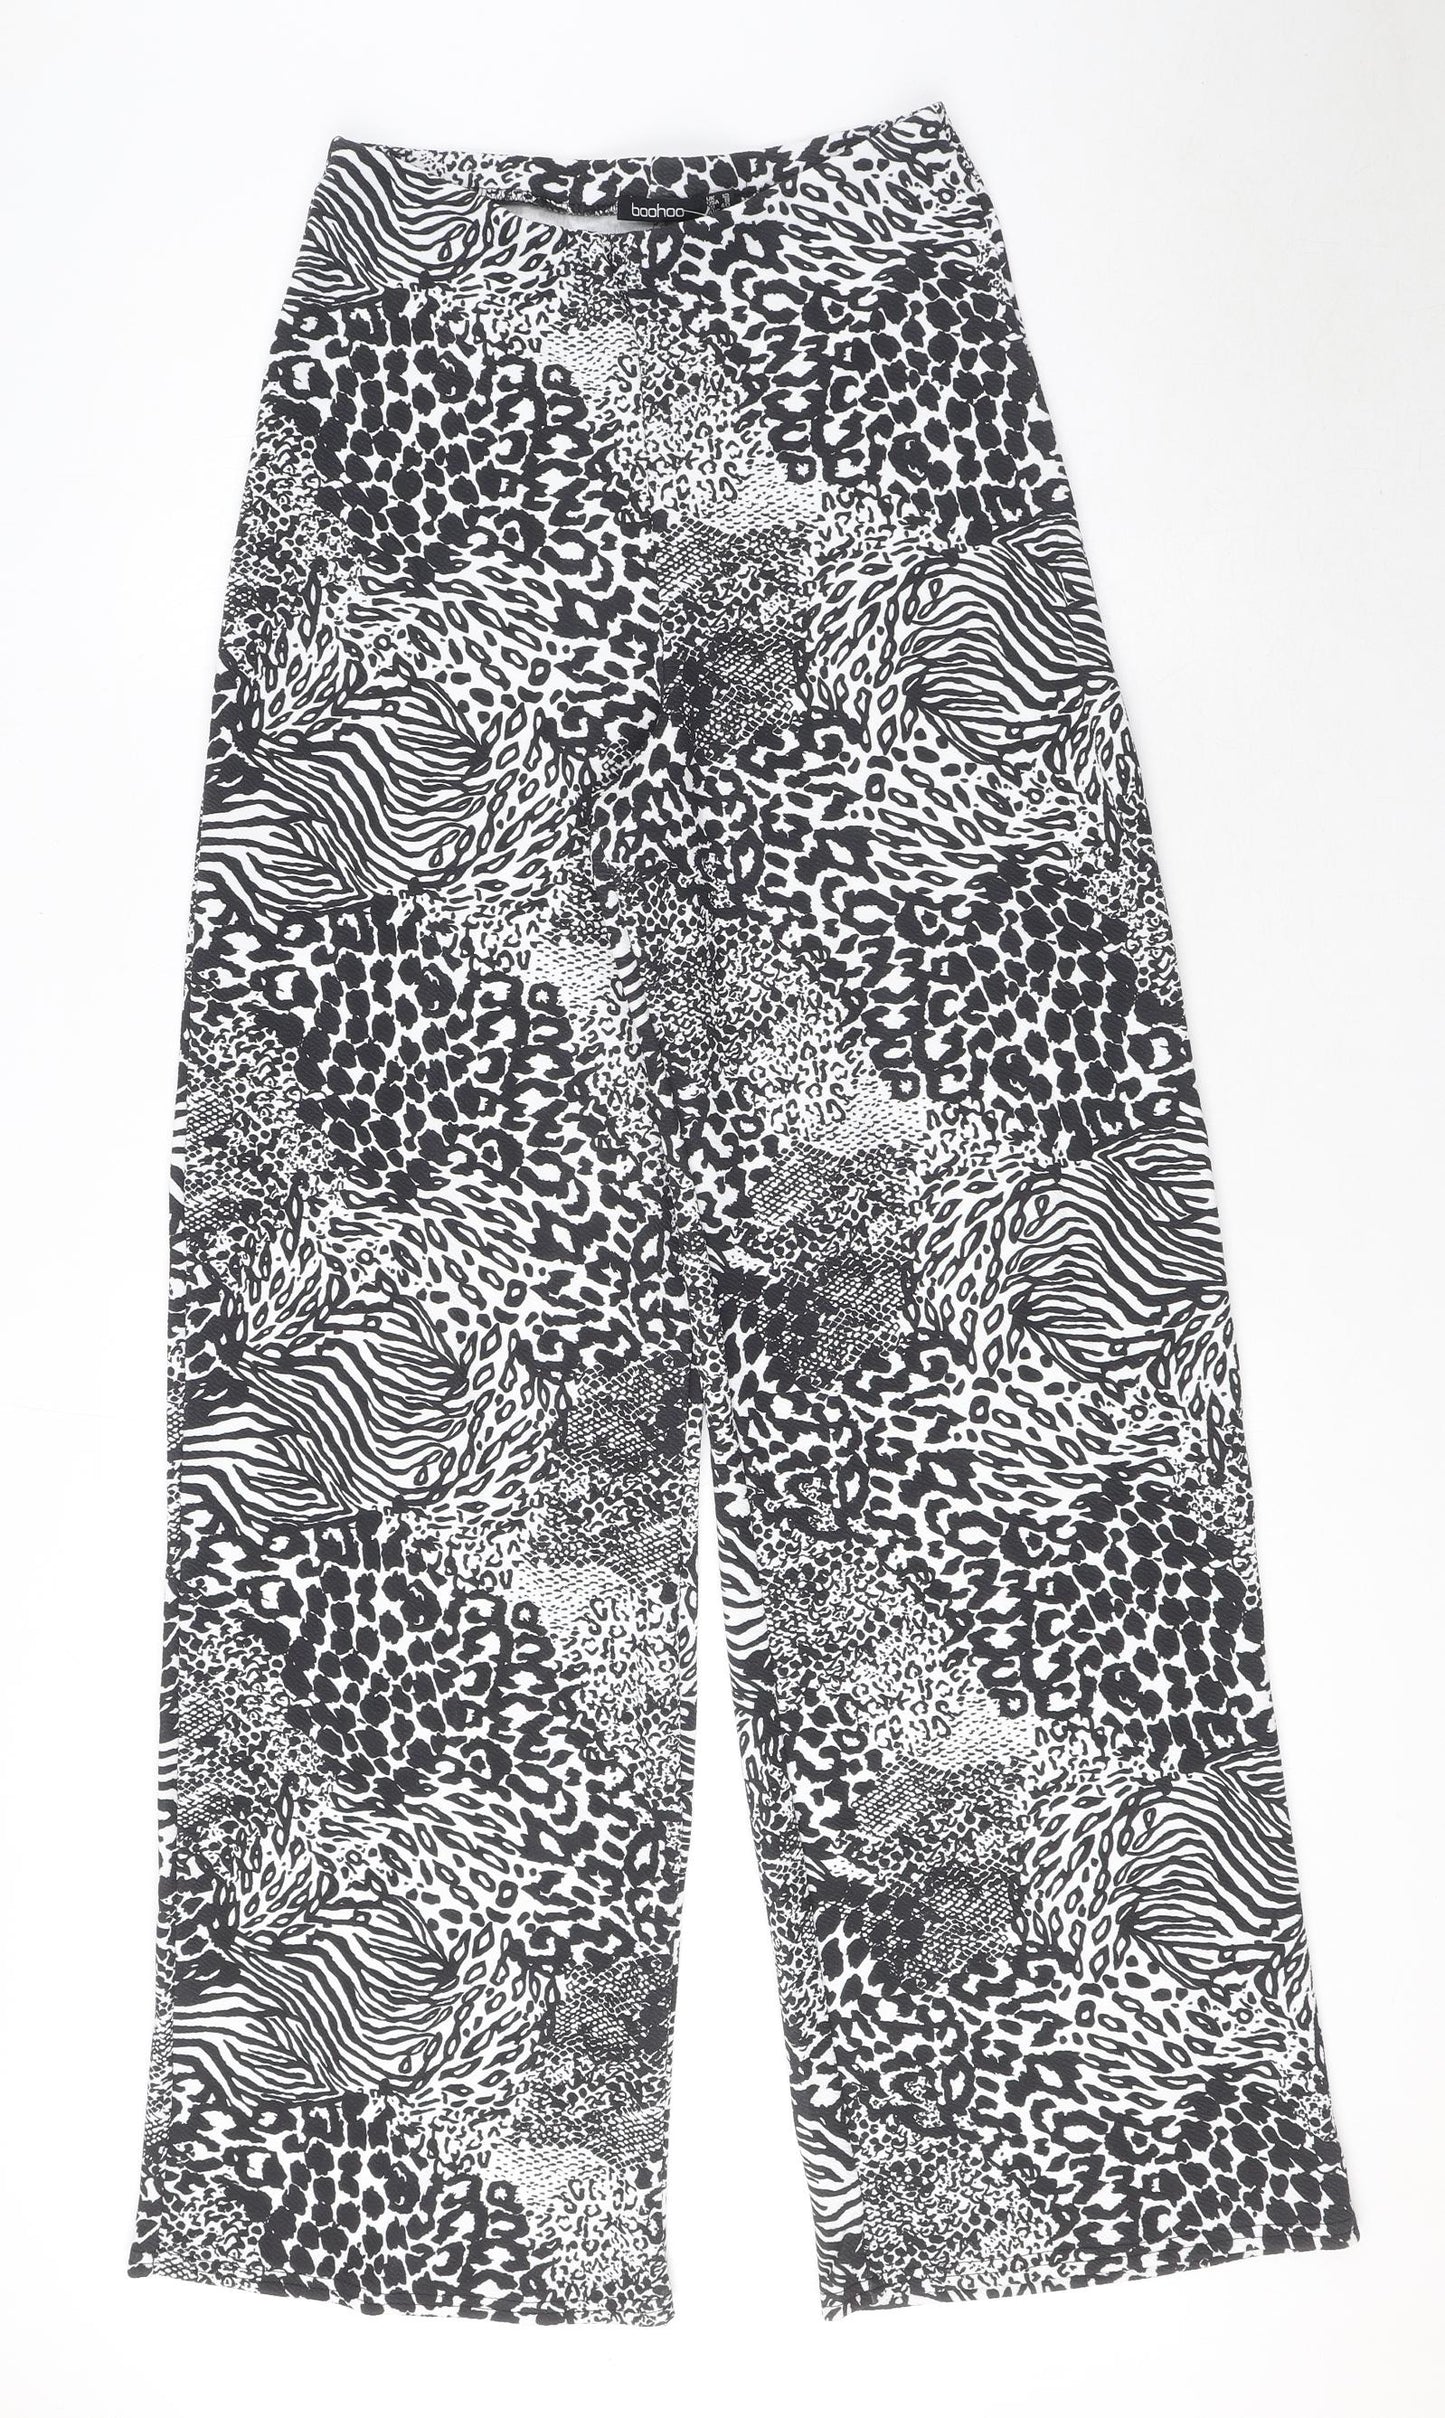 Boohoo Womens Black Animal Print Polyester Trousers Size 12 L31 in Regular - Leopard Tiger Snake Cheetah Print